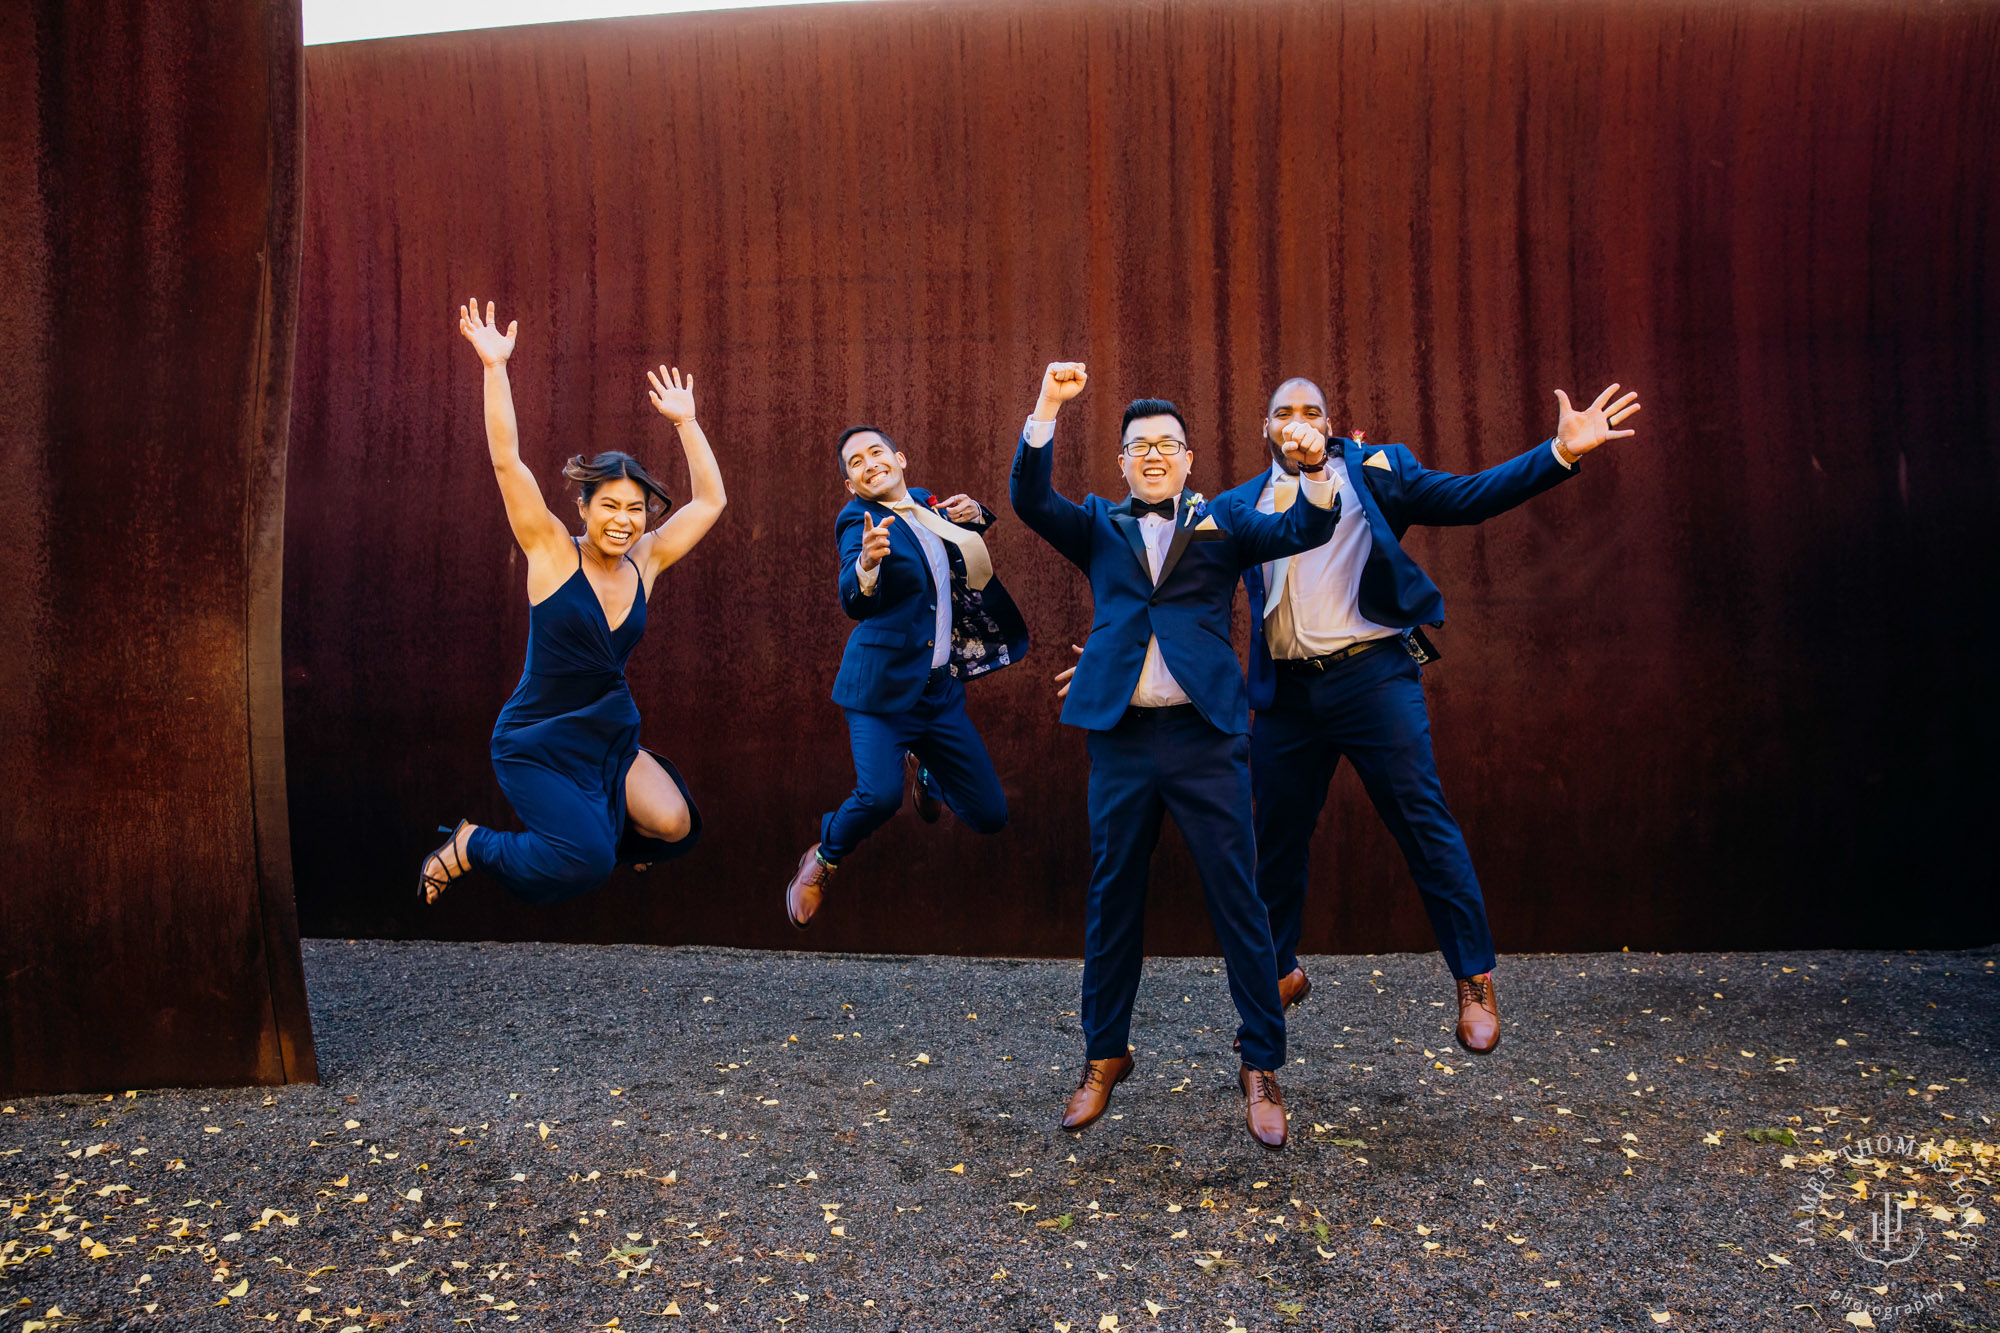 Four Seasons Seattle wedding by Seattle wedding photographer James Thomas Long Photography